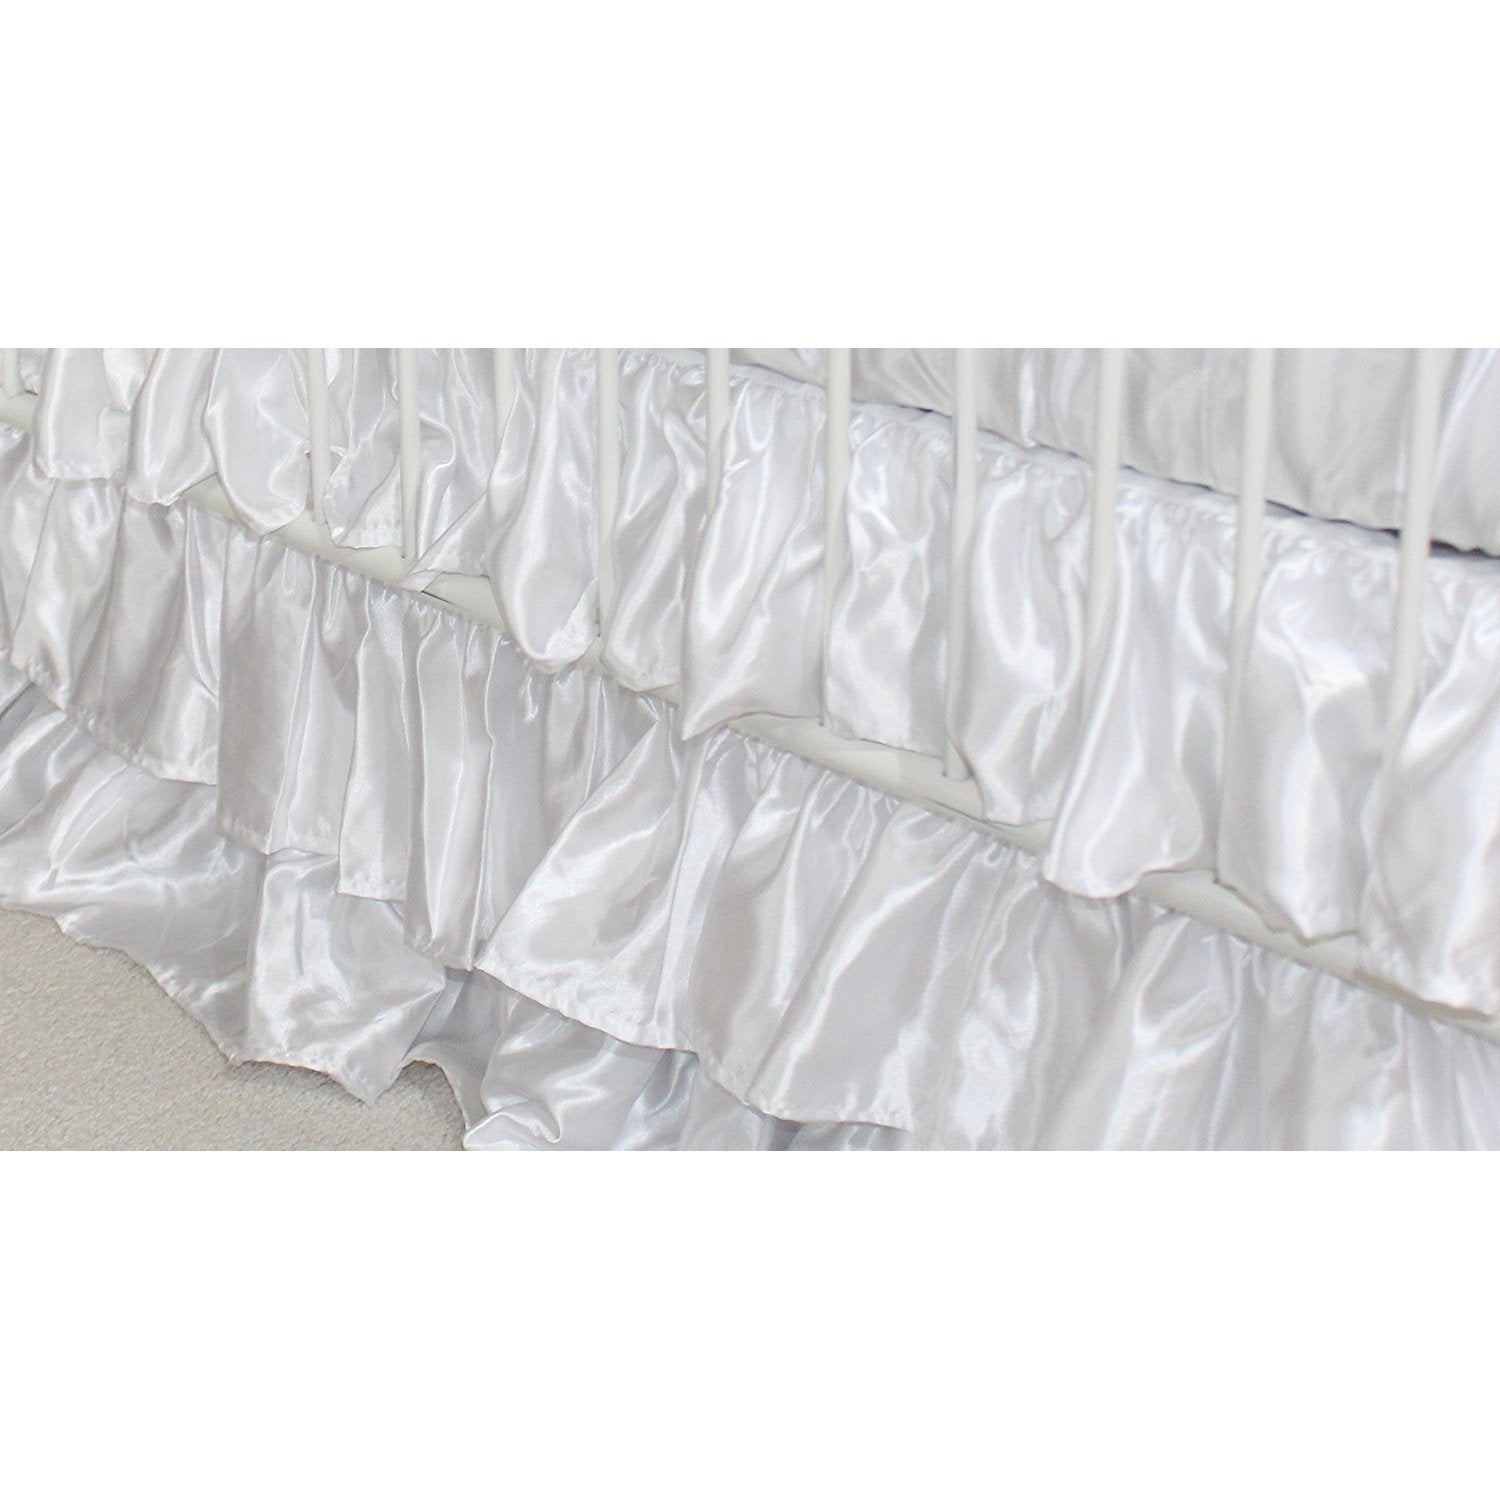 Waterfall Ruffle 3 Tier Skirt | White Cloud Satin-Crib Skirt-Default-Jack and Jill Boutique